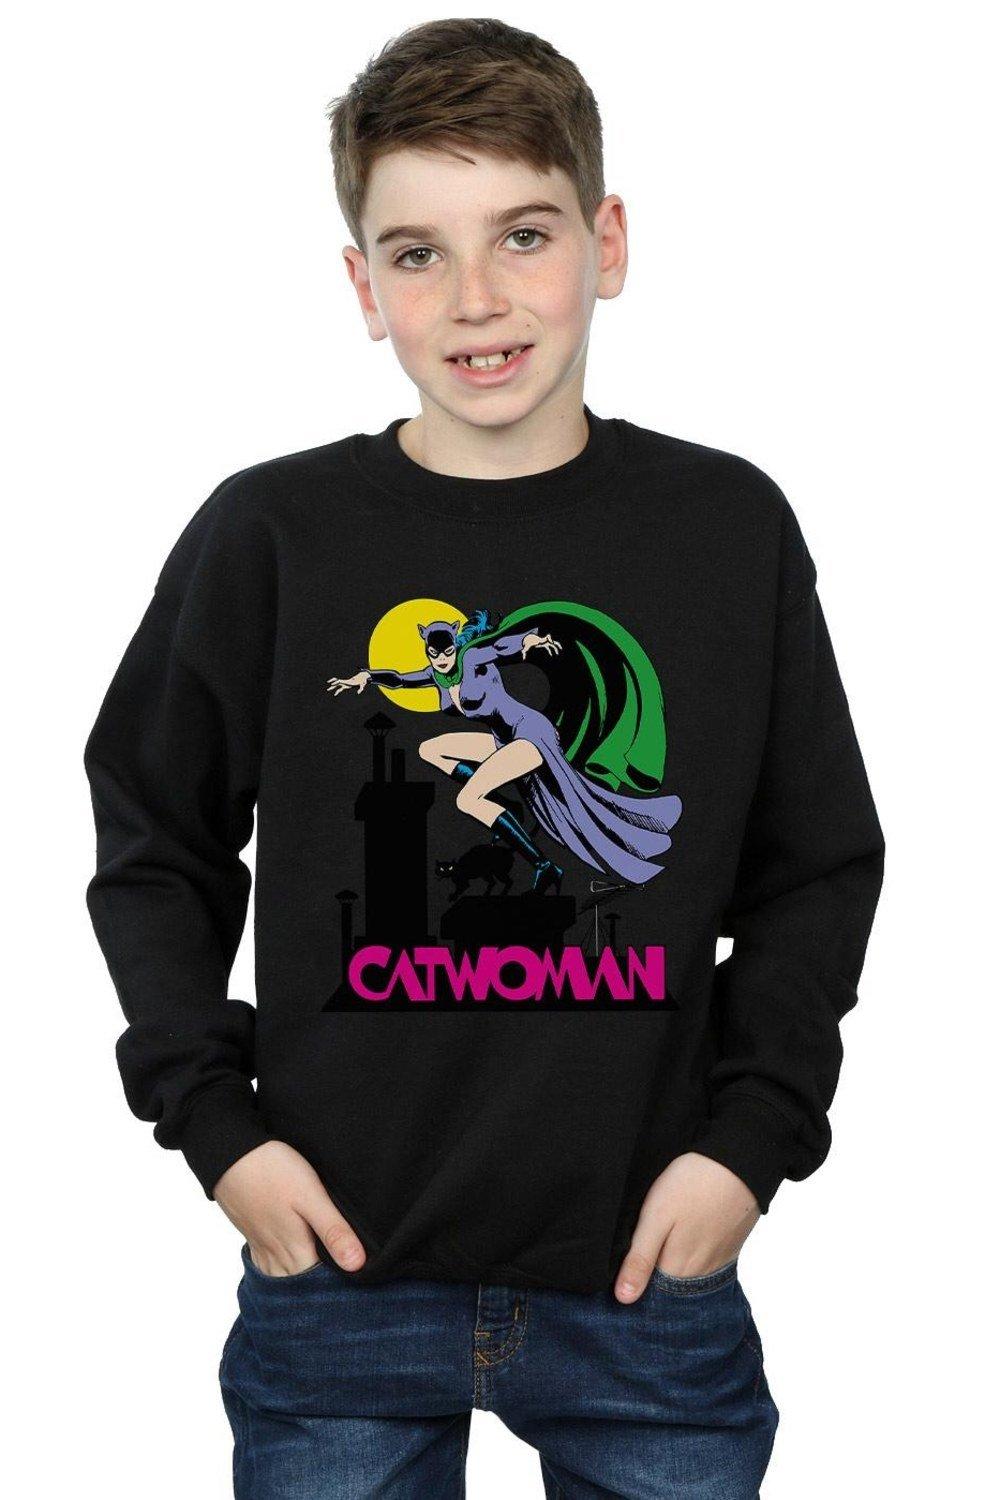 Catwoman Text Logo Sweatshirt